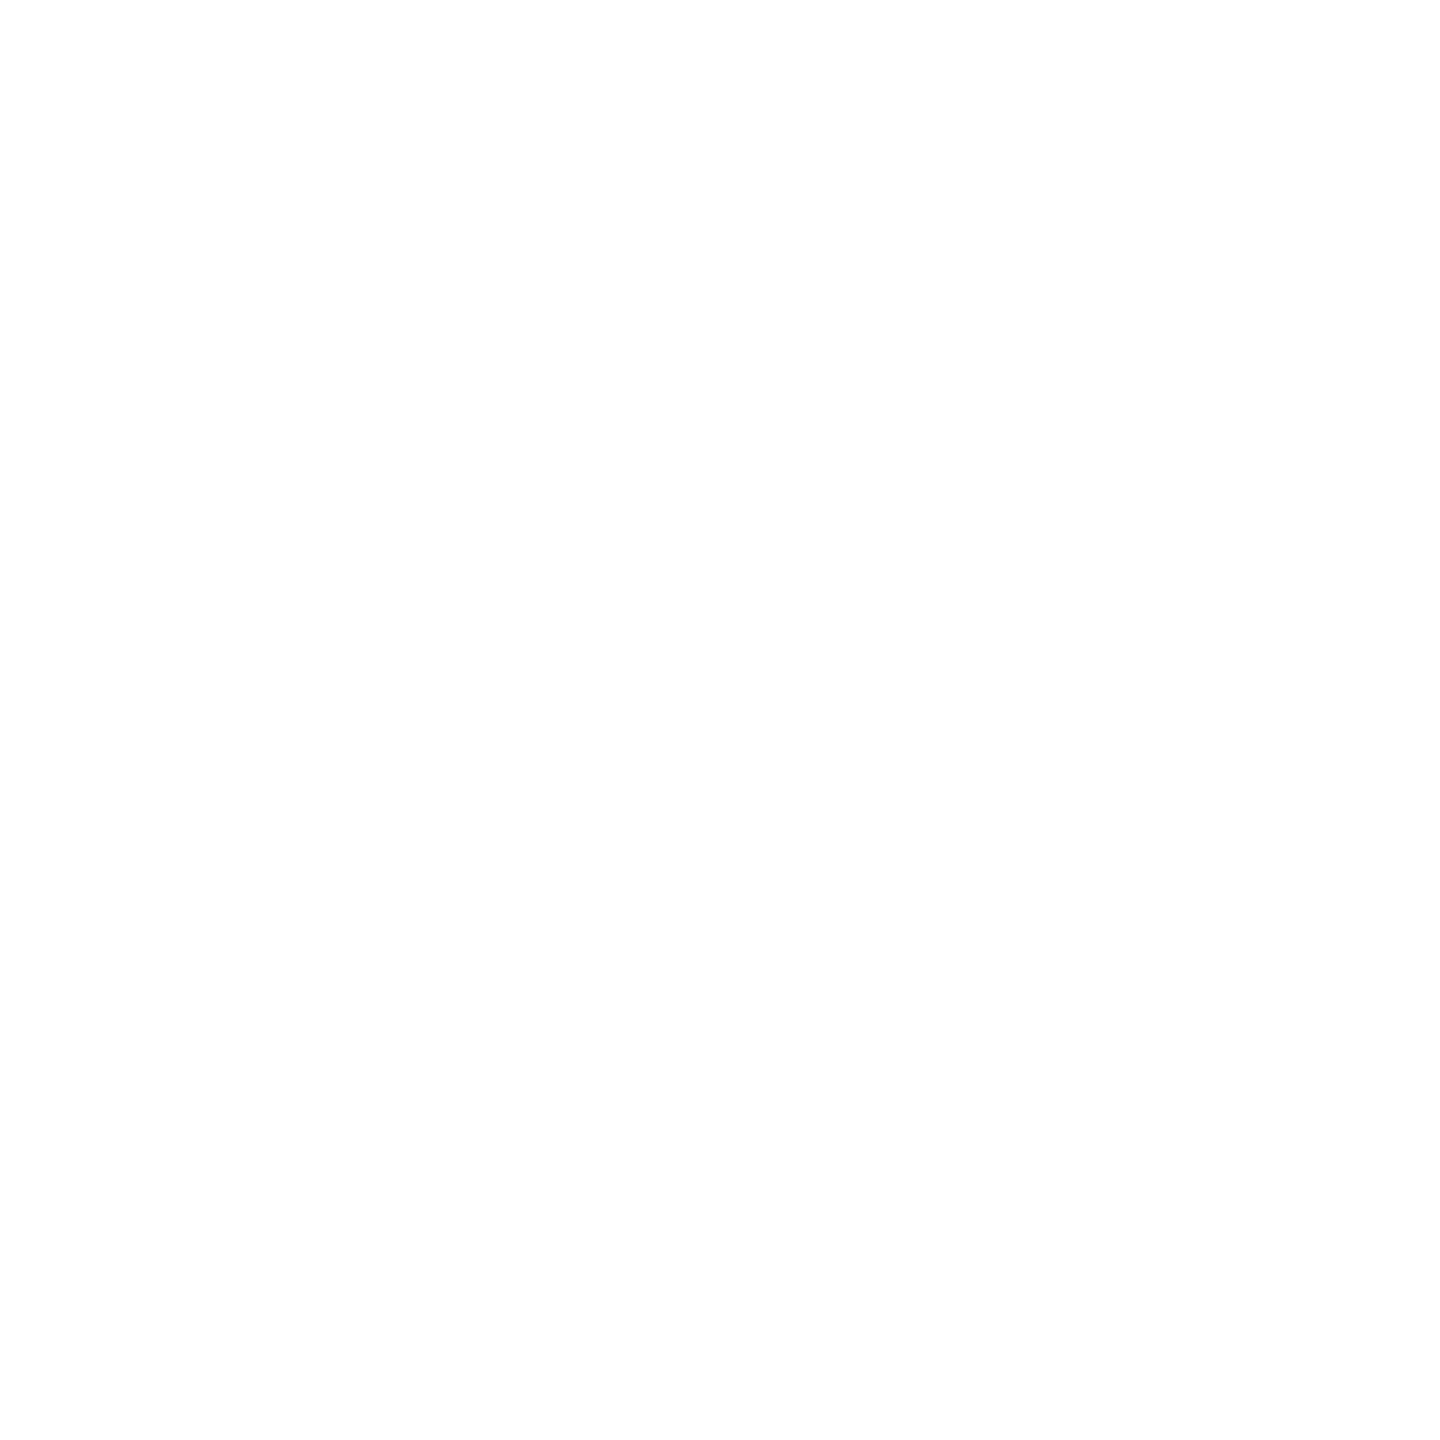 Covenant Classical Community School